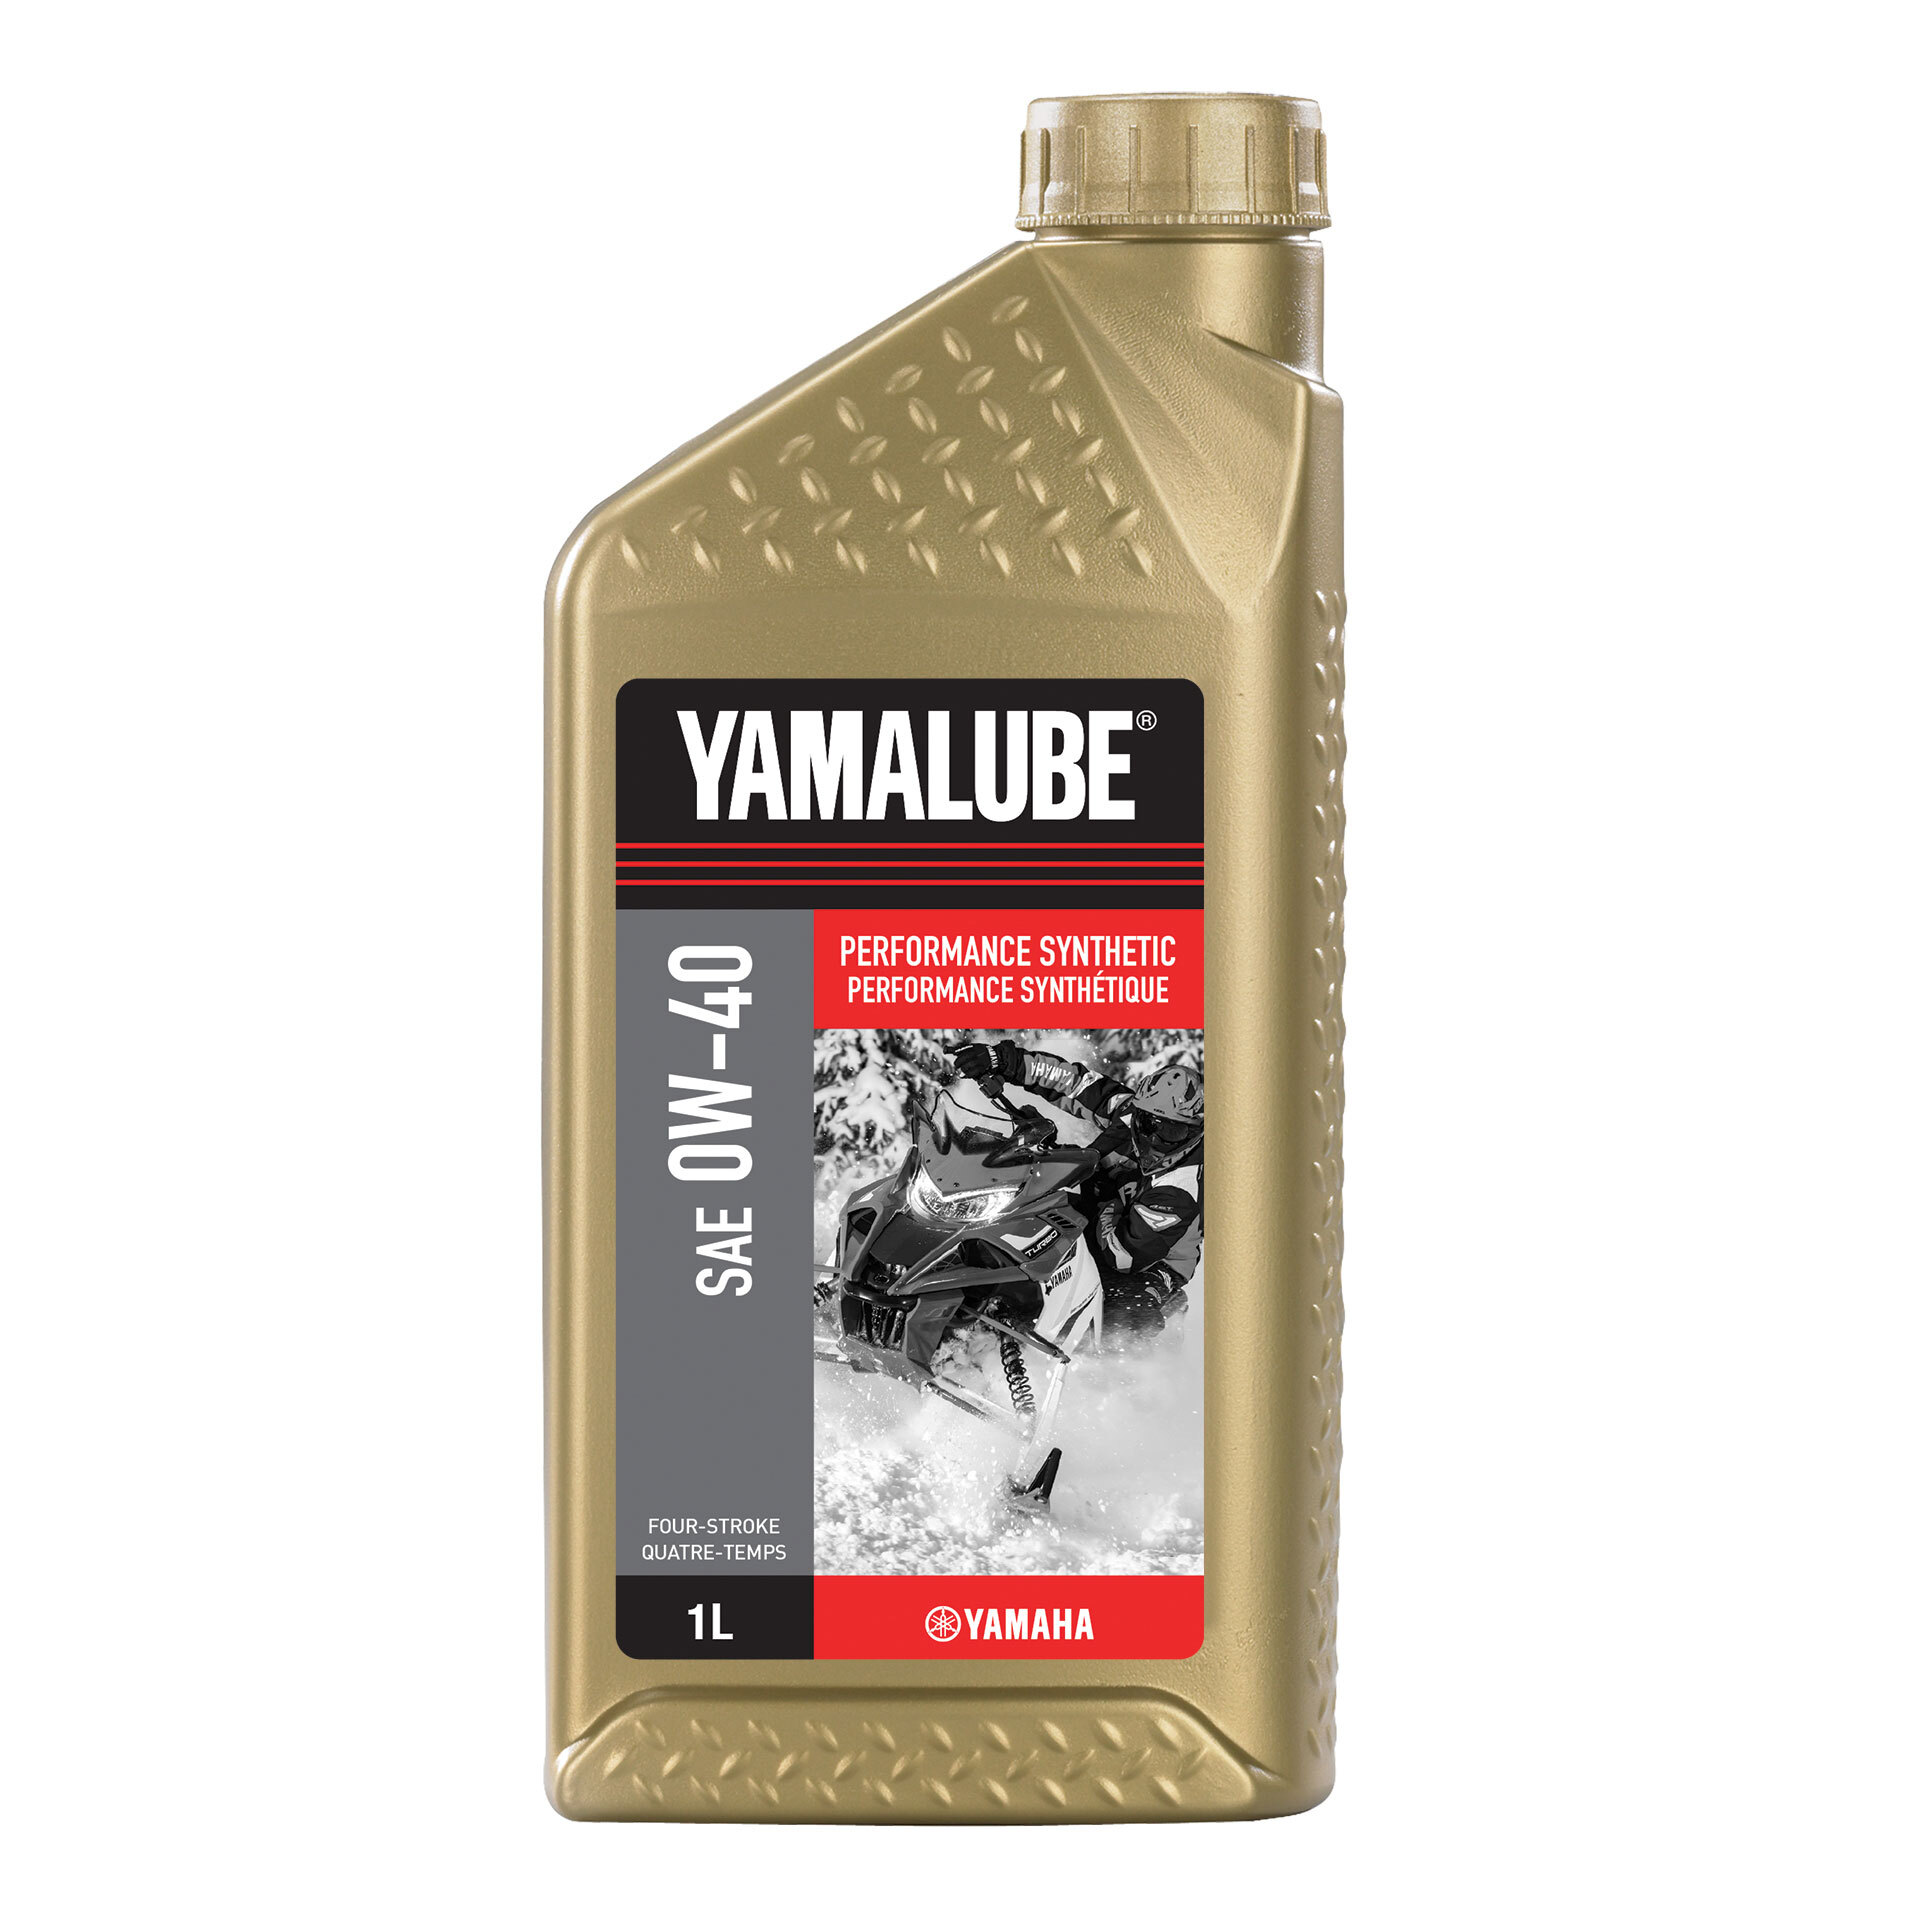 Yamalube® 0W 40 Performance Synthetic Engine Oil